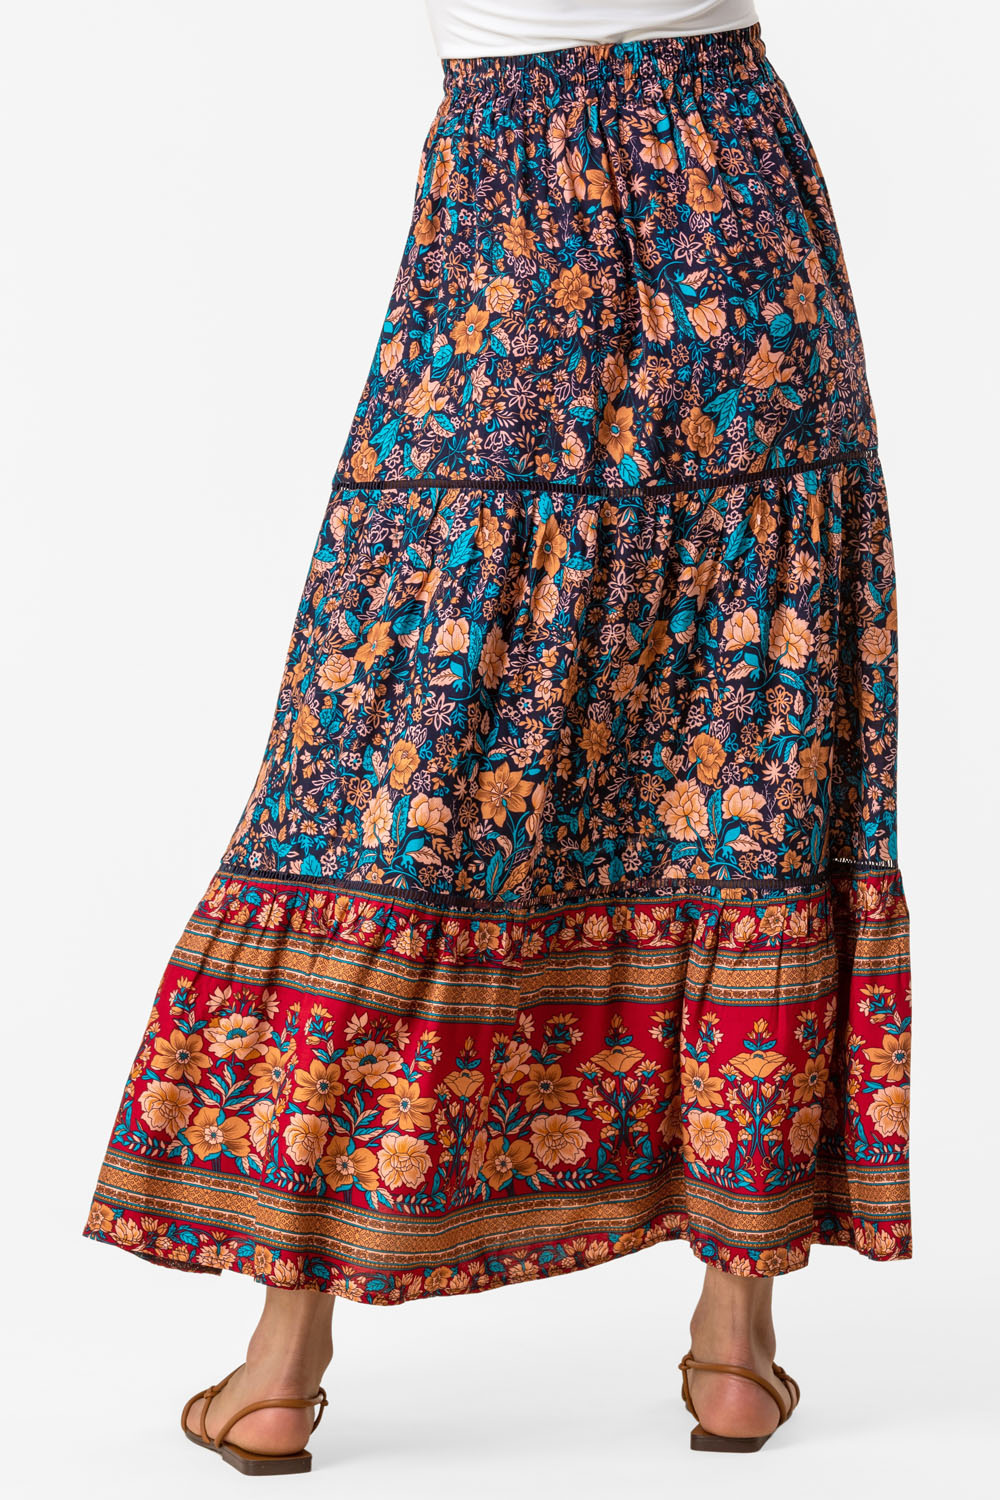 Floral Border Print Maxi Skirt in Navy - Roman Originals UK